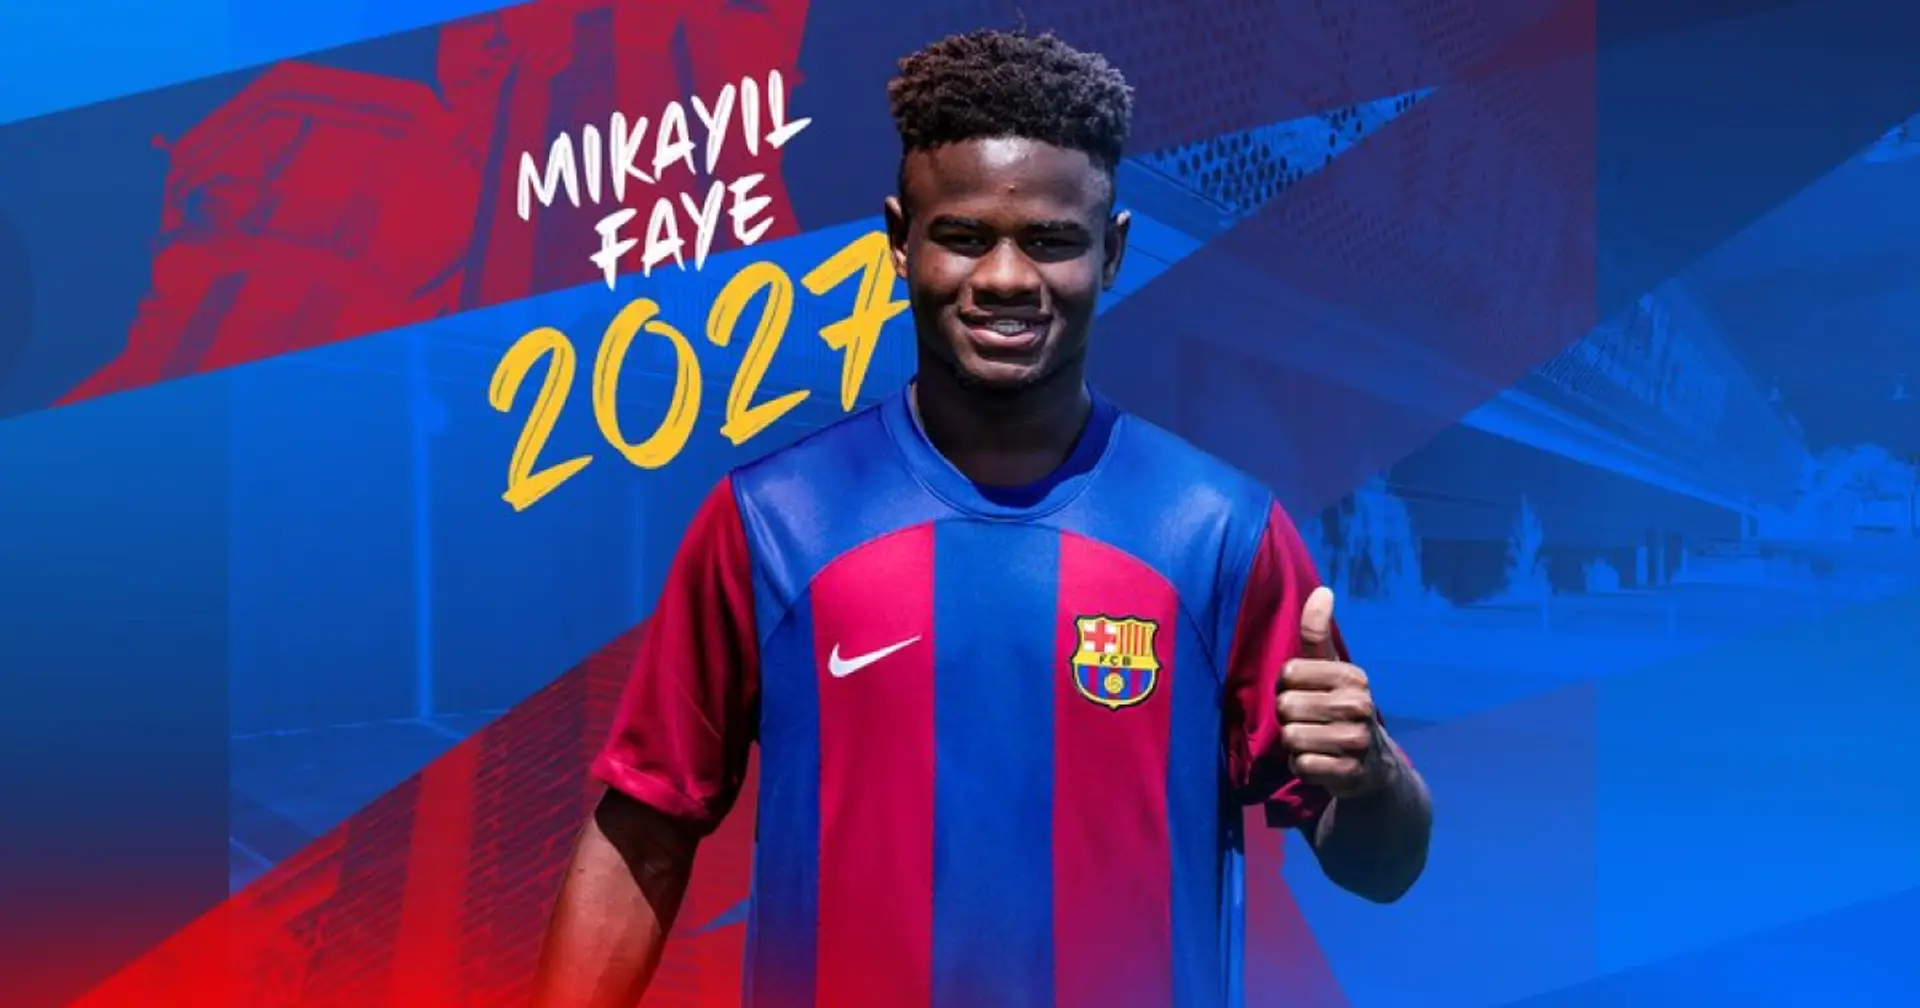 OFICIAL: El Barcelona ficha a Mikayil Faye